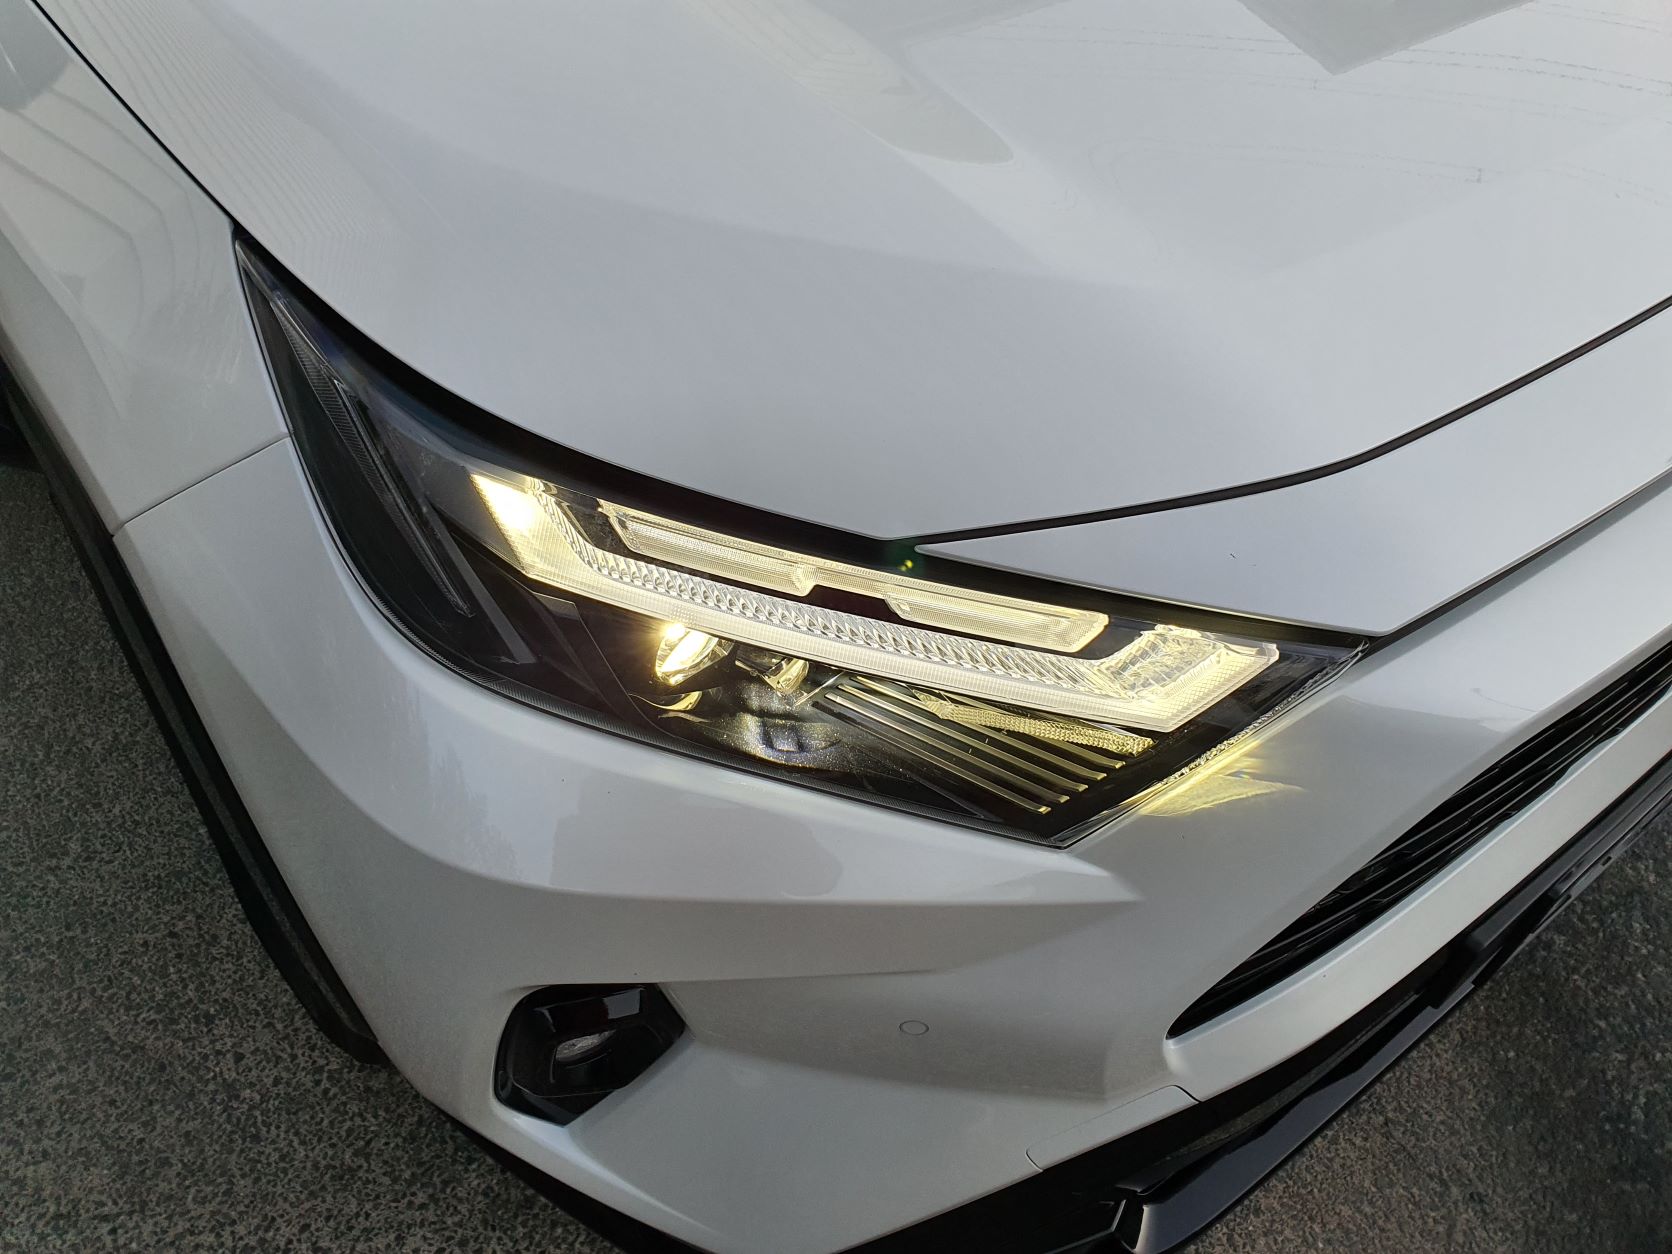 View of the headlight on the new Toyota RAV4 Hybrid XSE